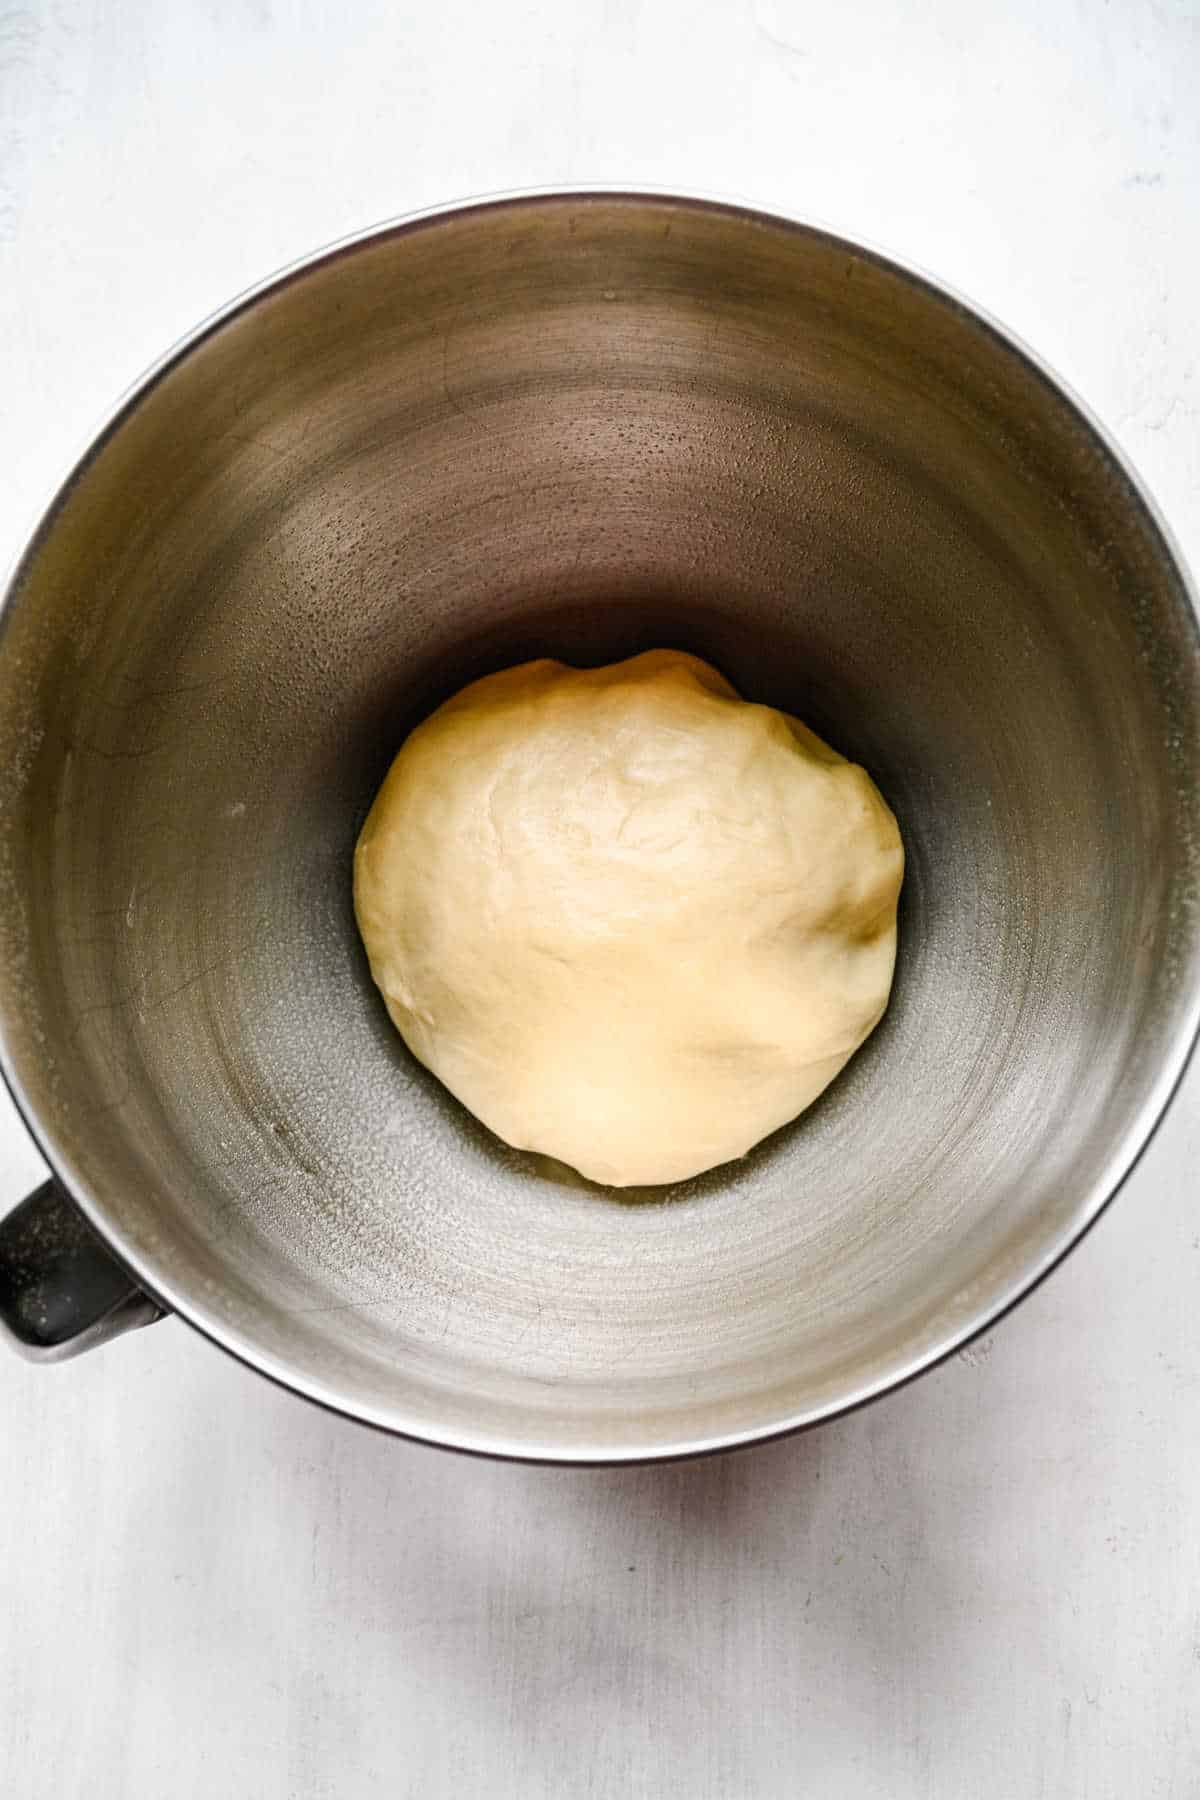 Honey bun roll dough in a silver mixing bowl. 